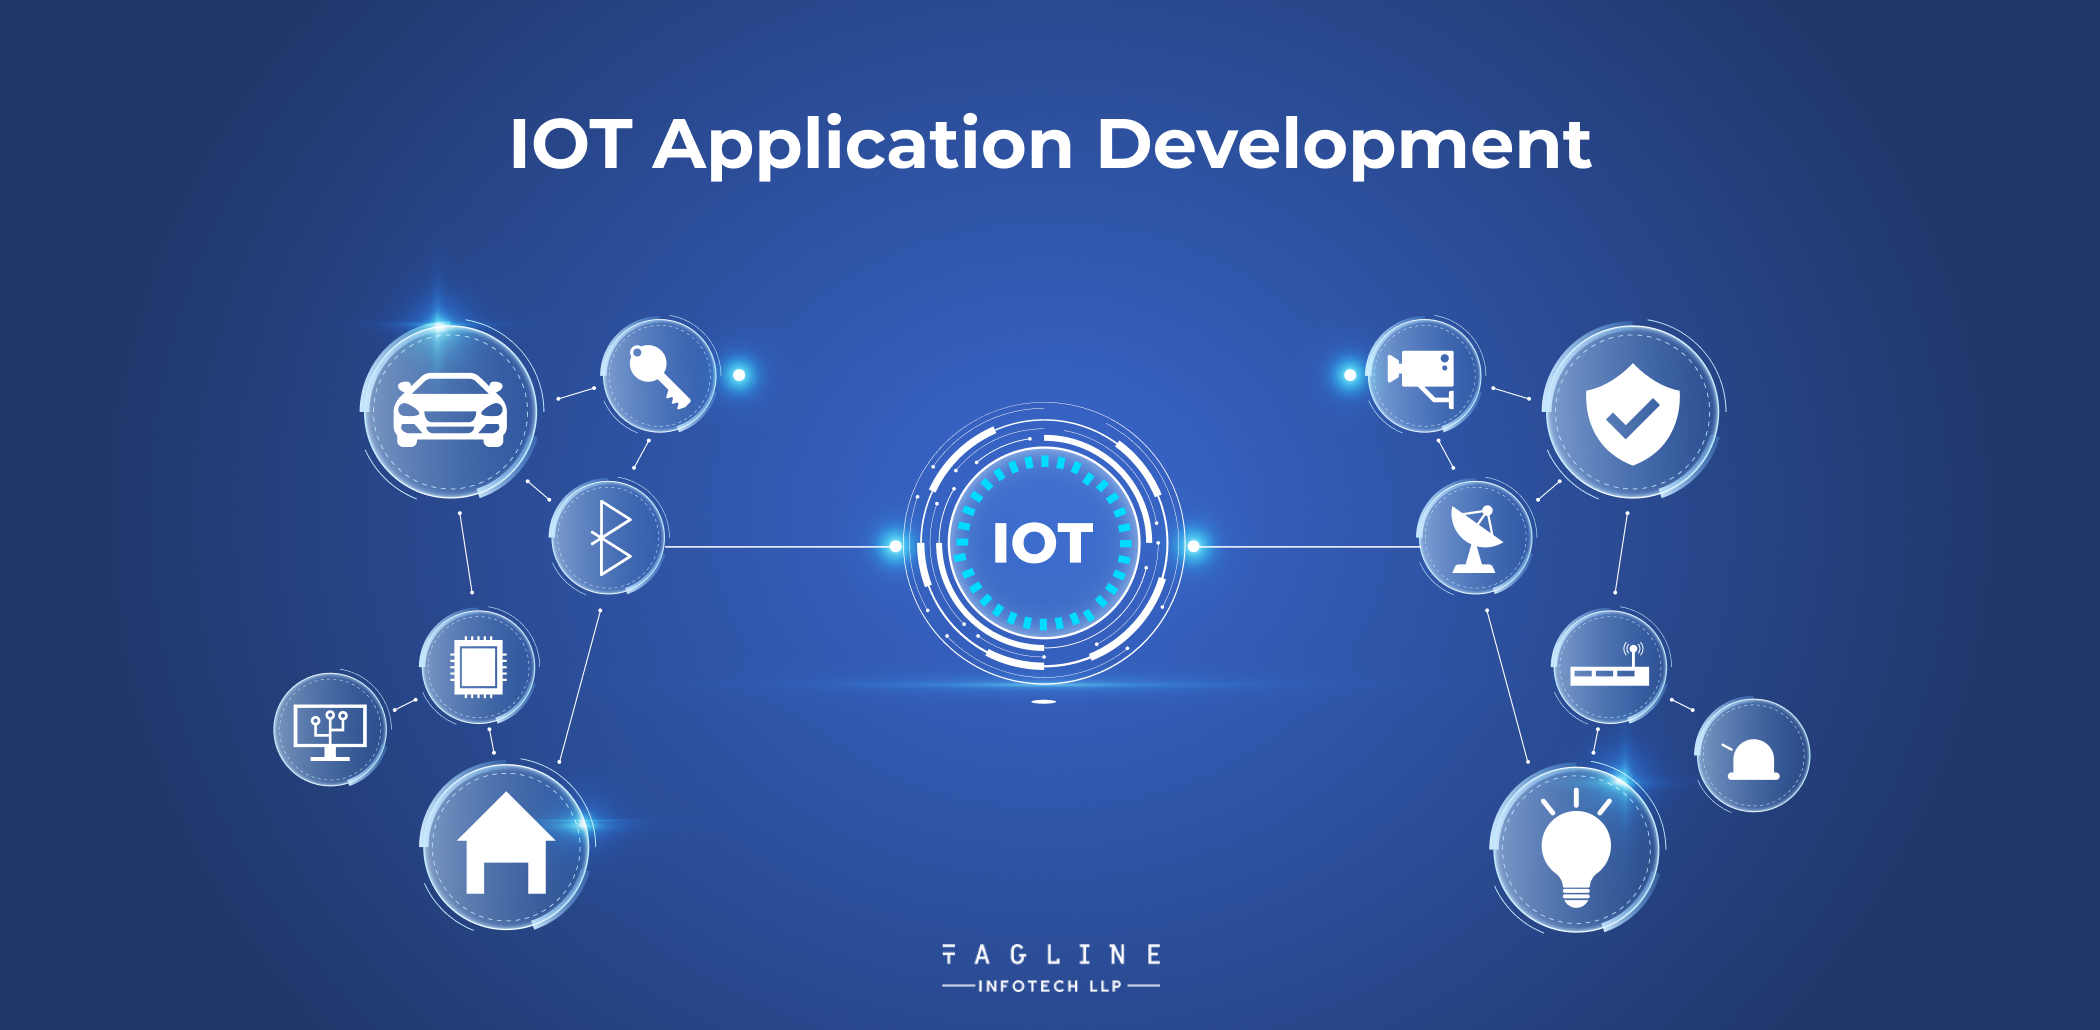 IoT Application Development